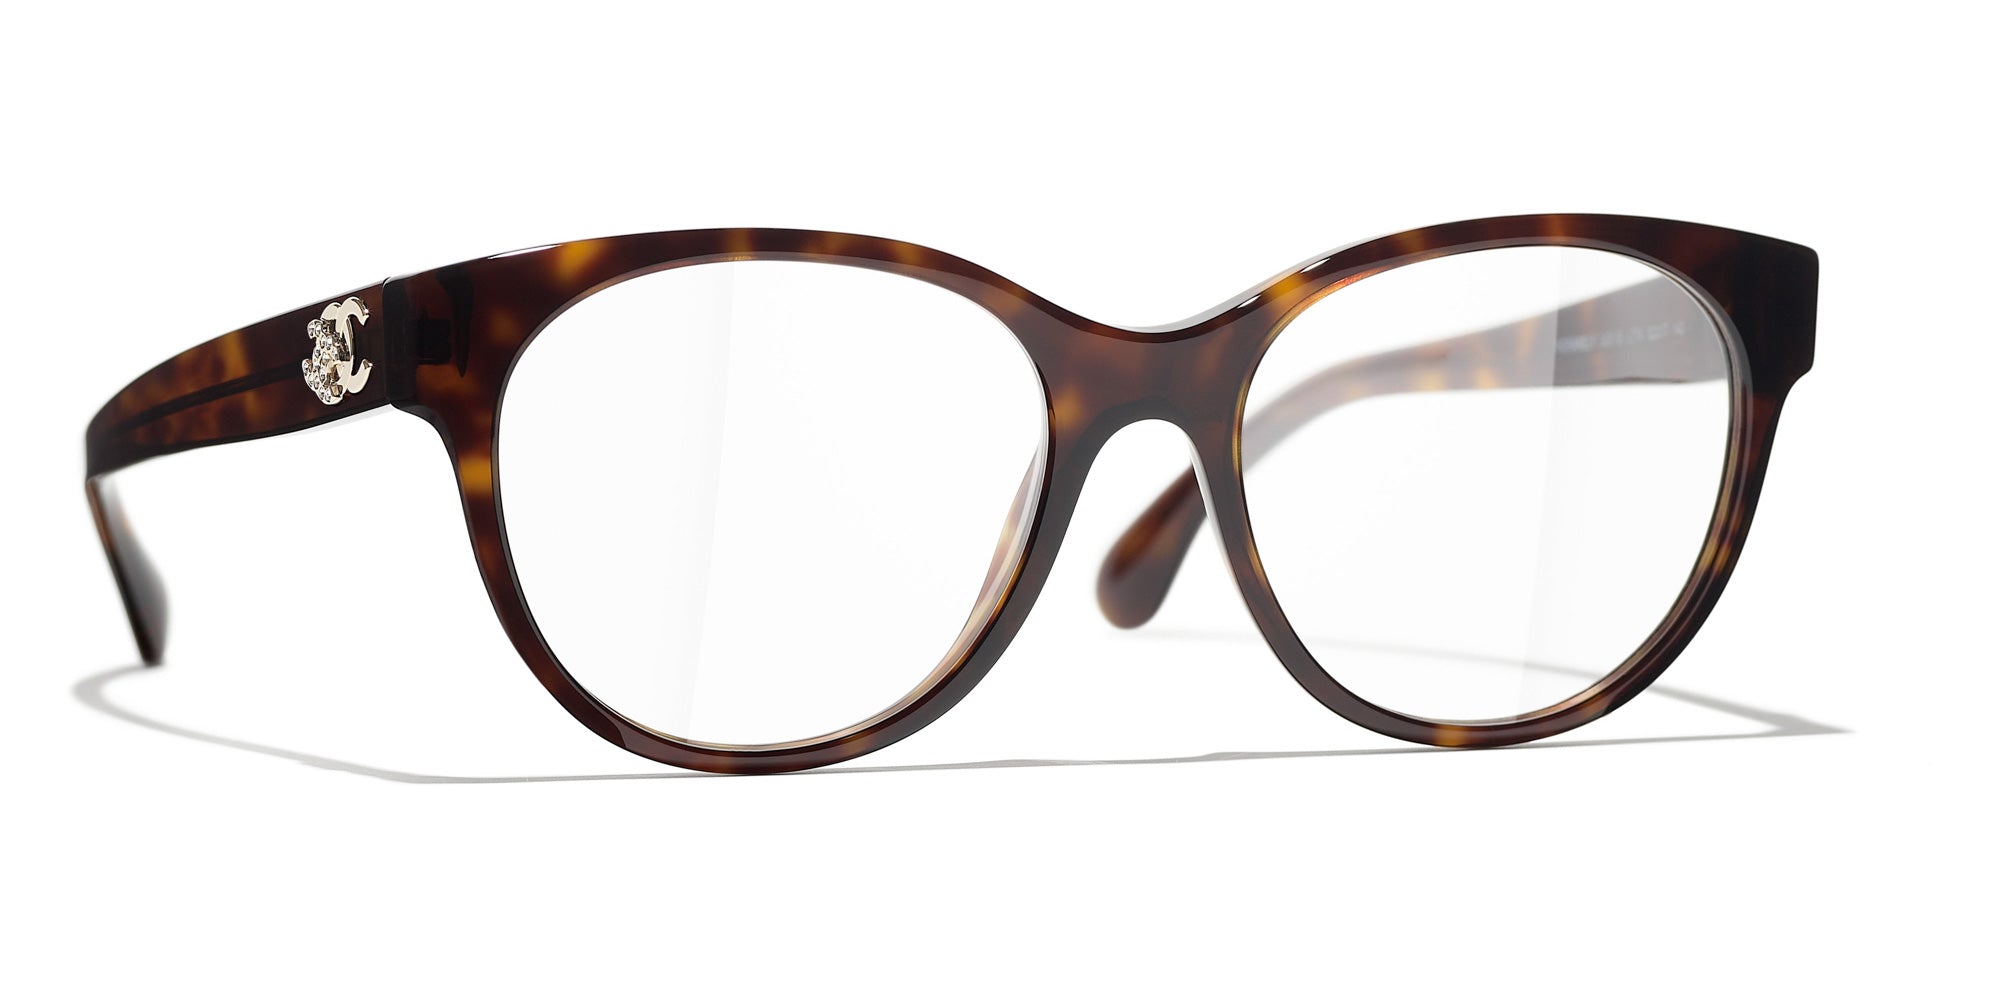 Chanel 3372 c.503 Blue Eyeglasses Frames Size 48mm-19-140 - Chanel Eyeglasses